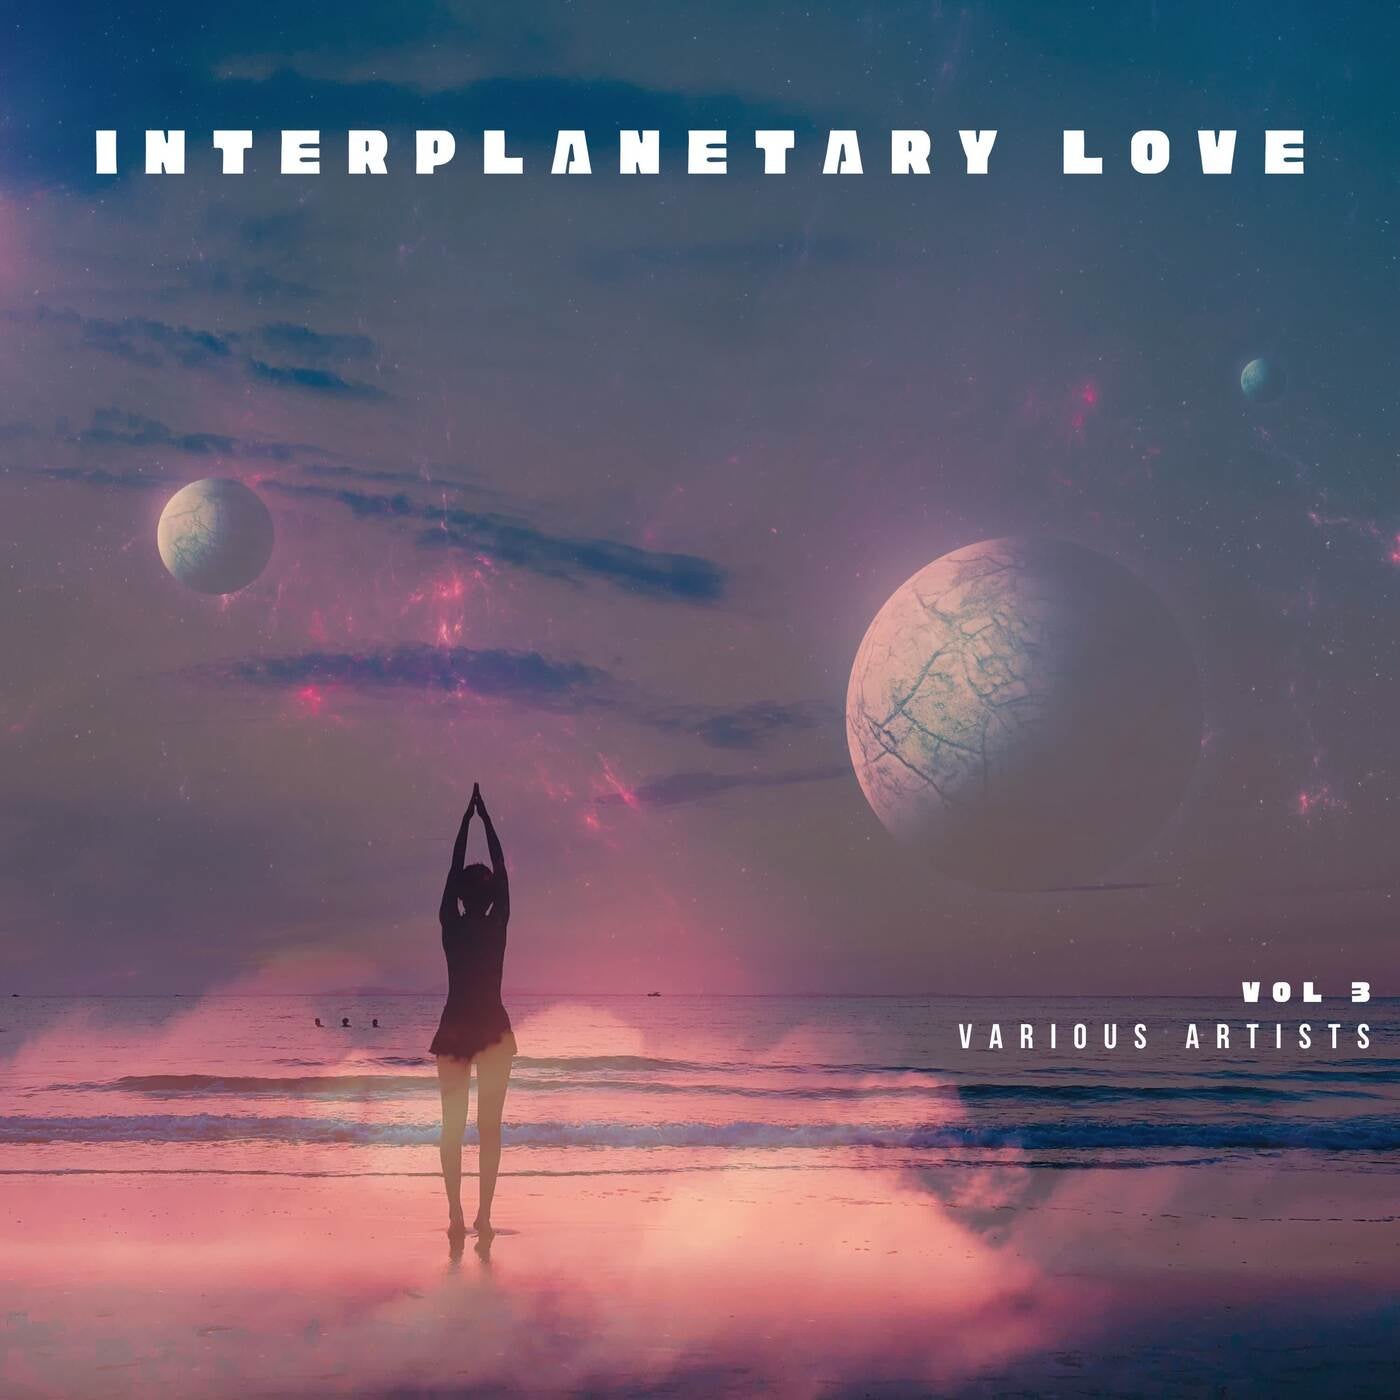 Interplanetary Love, Vol. 3